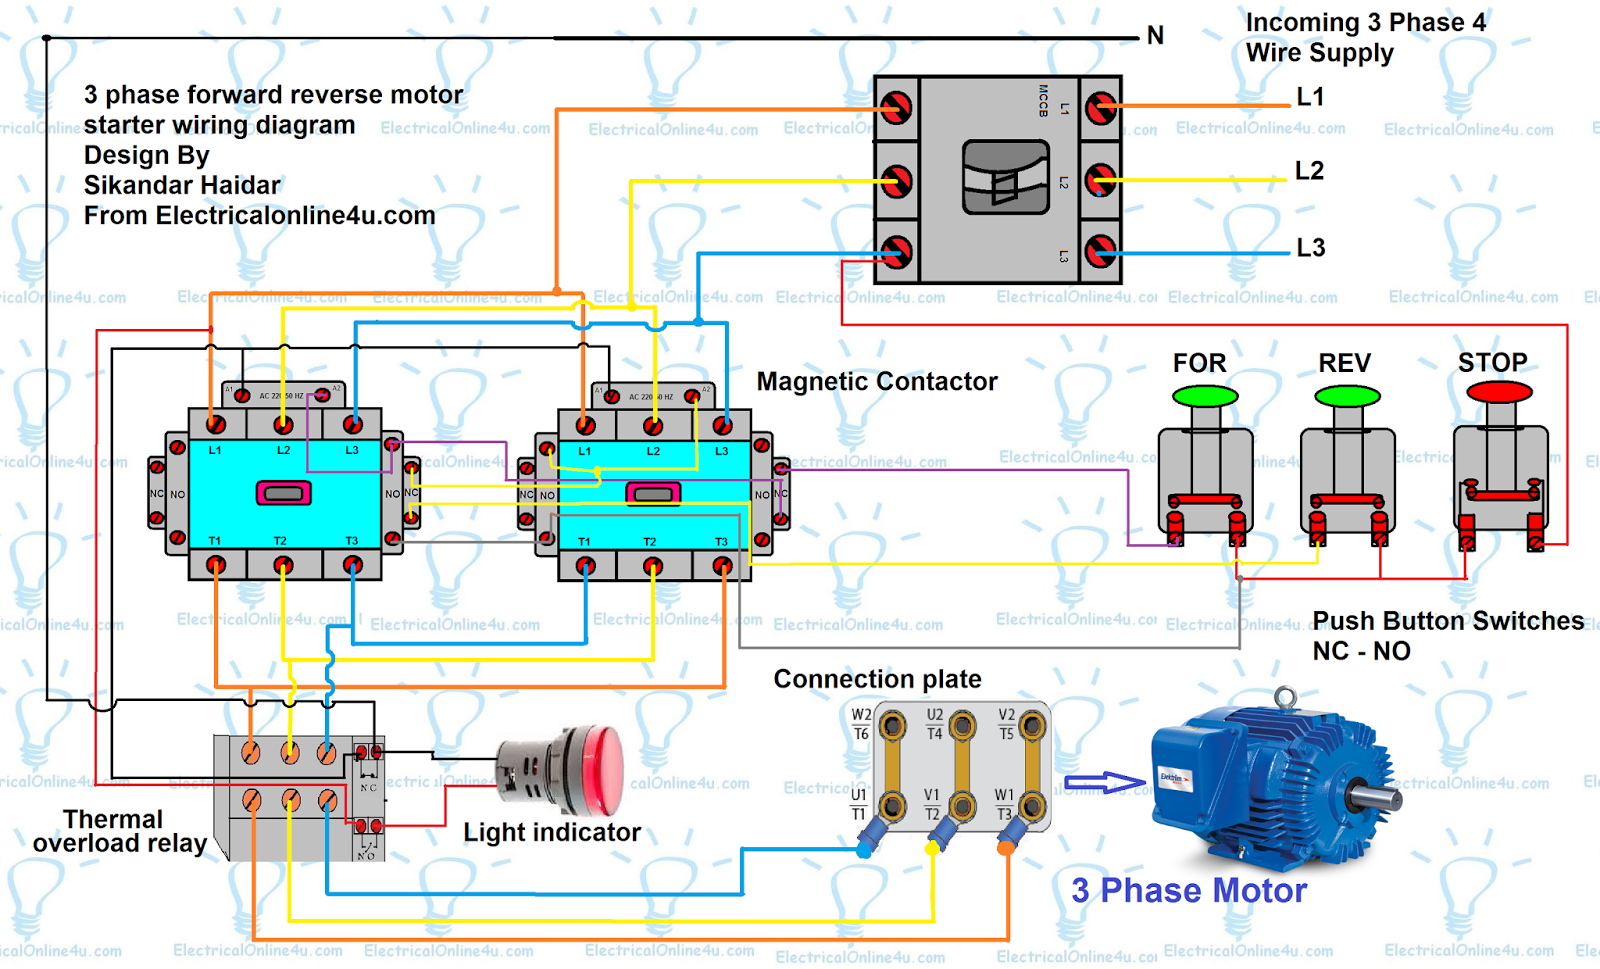 Forward Reverse Motor Control Diagram For 3 Phase Motor